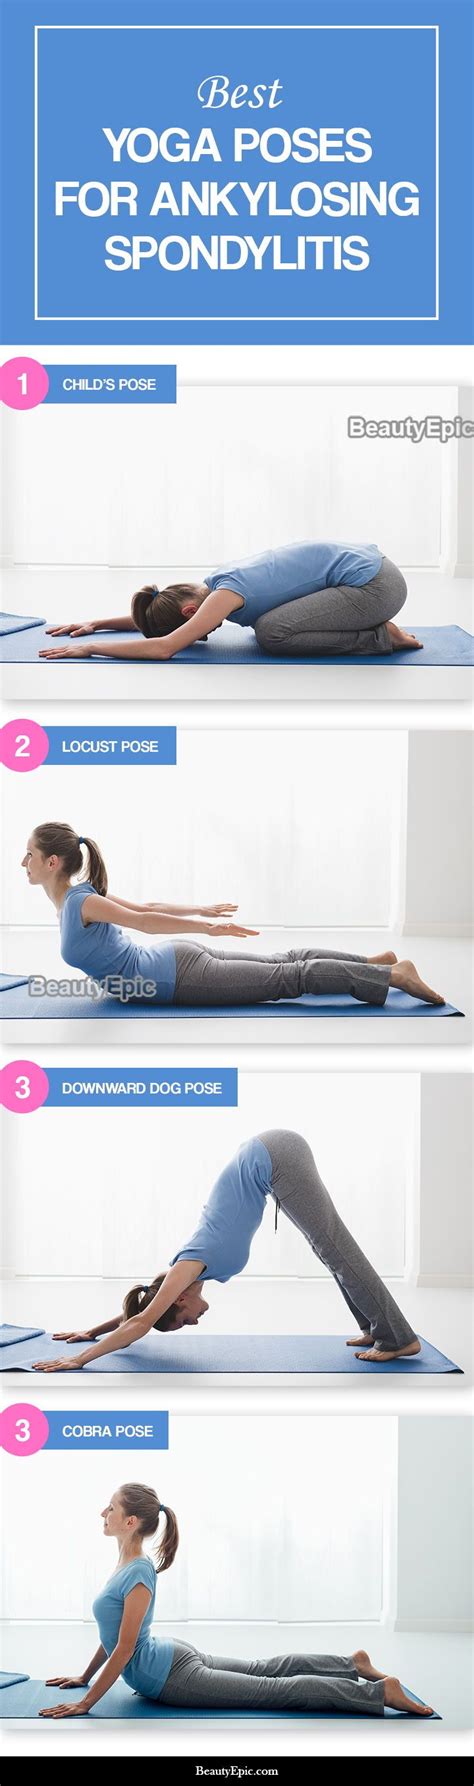 6 effective yoga poses for ankylosing spondylitis ankylosing spondylitis yoga poses yoga